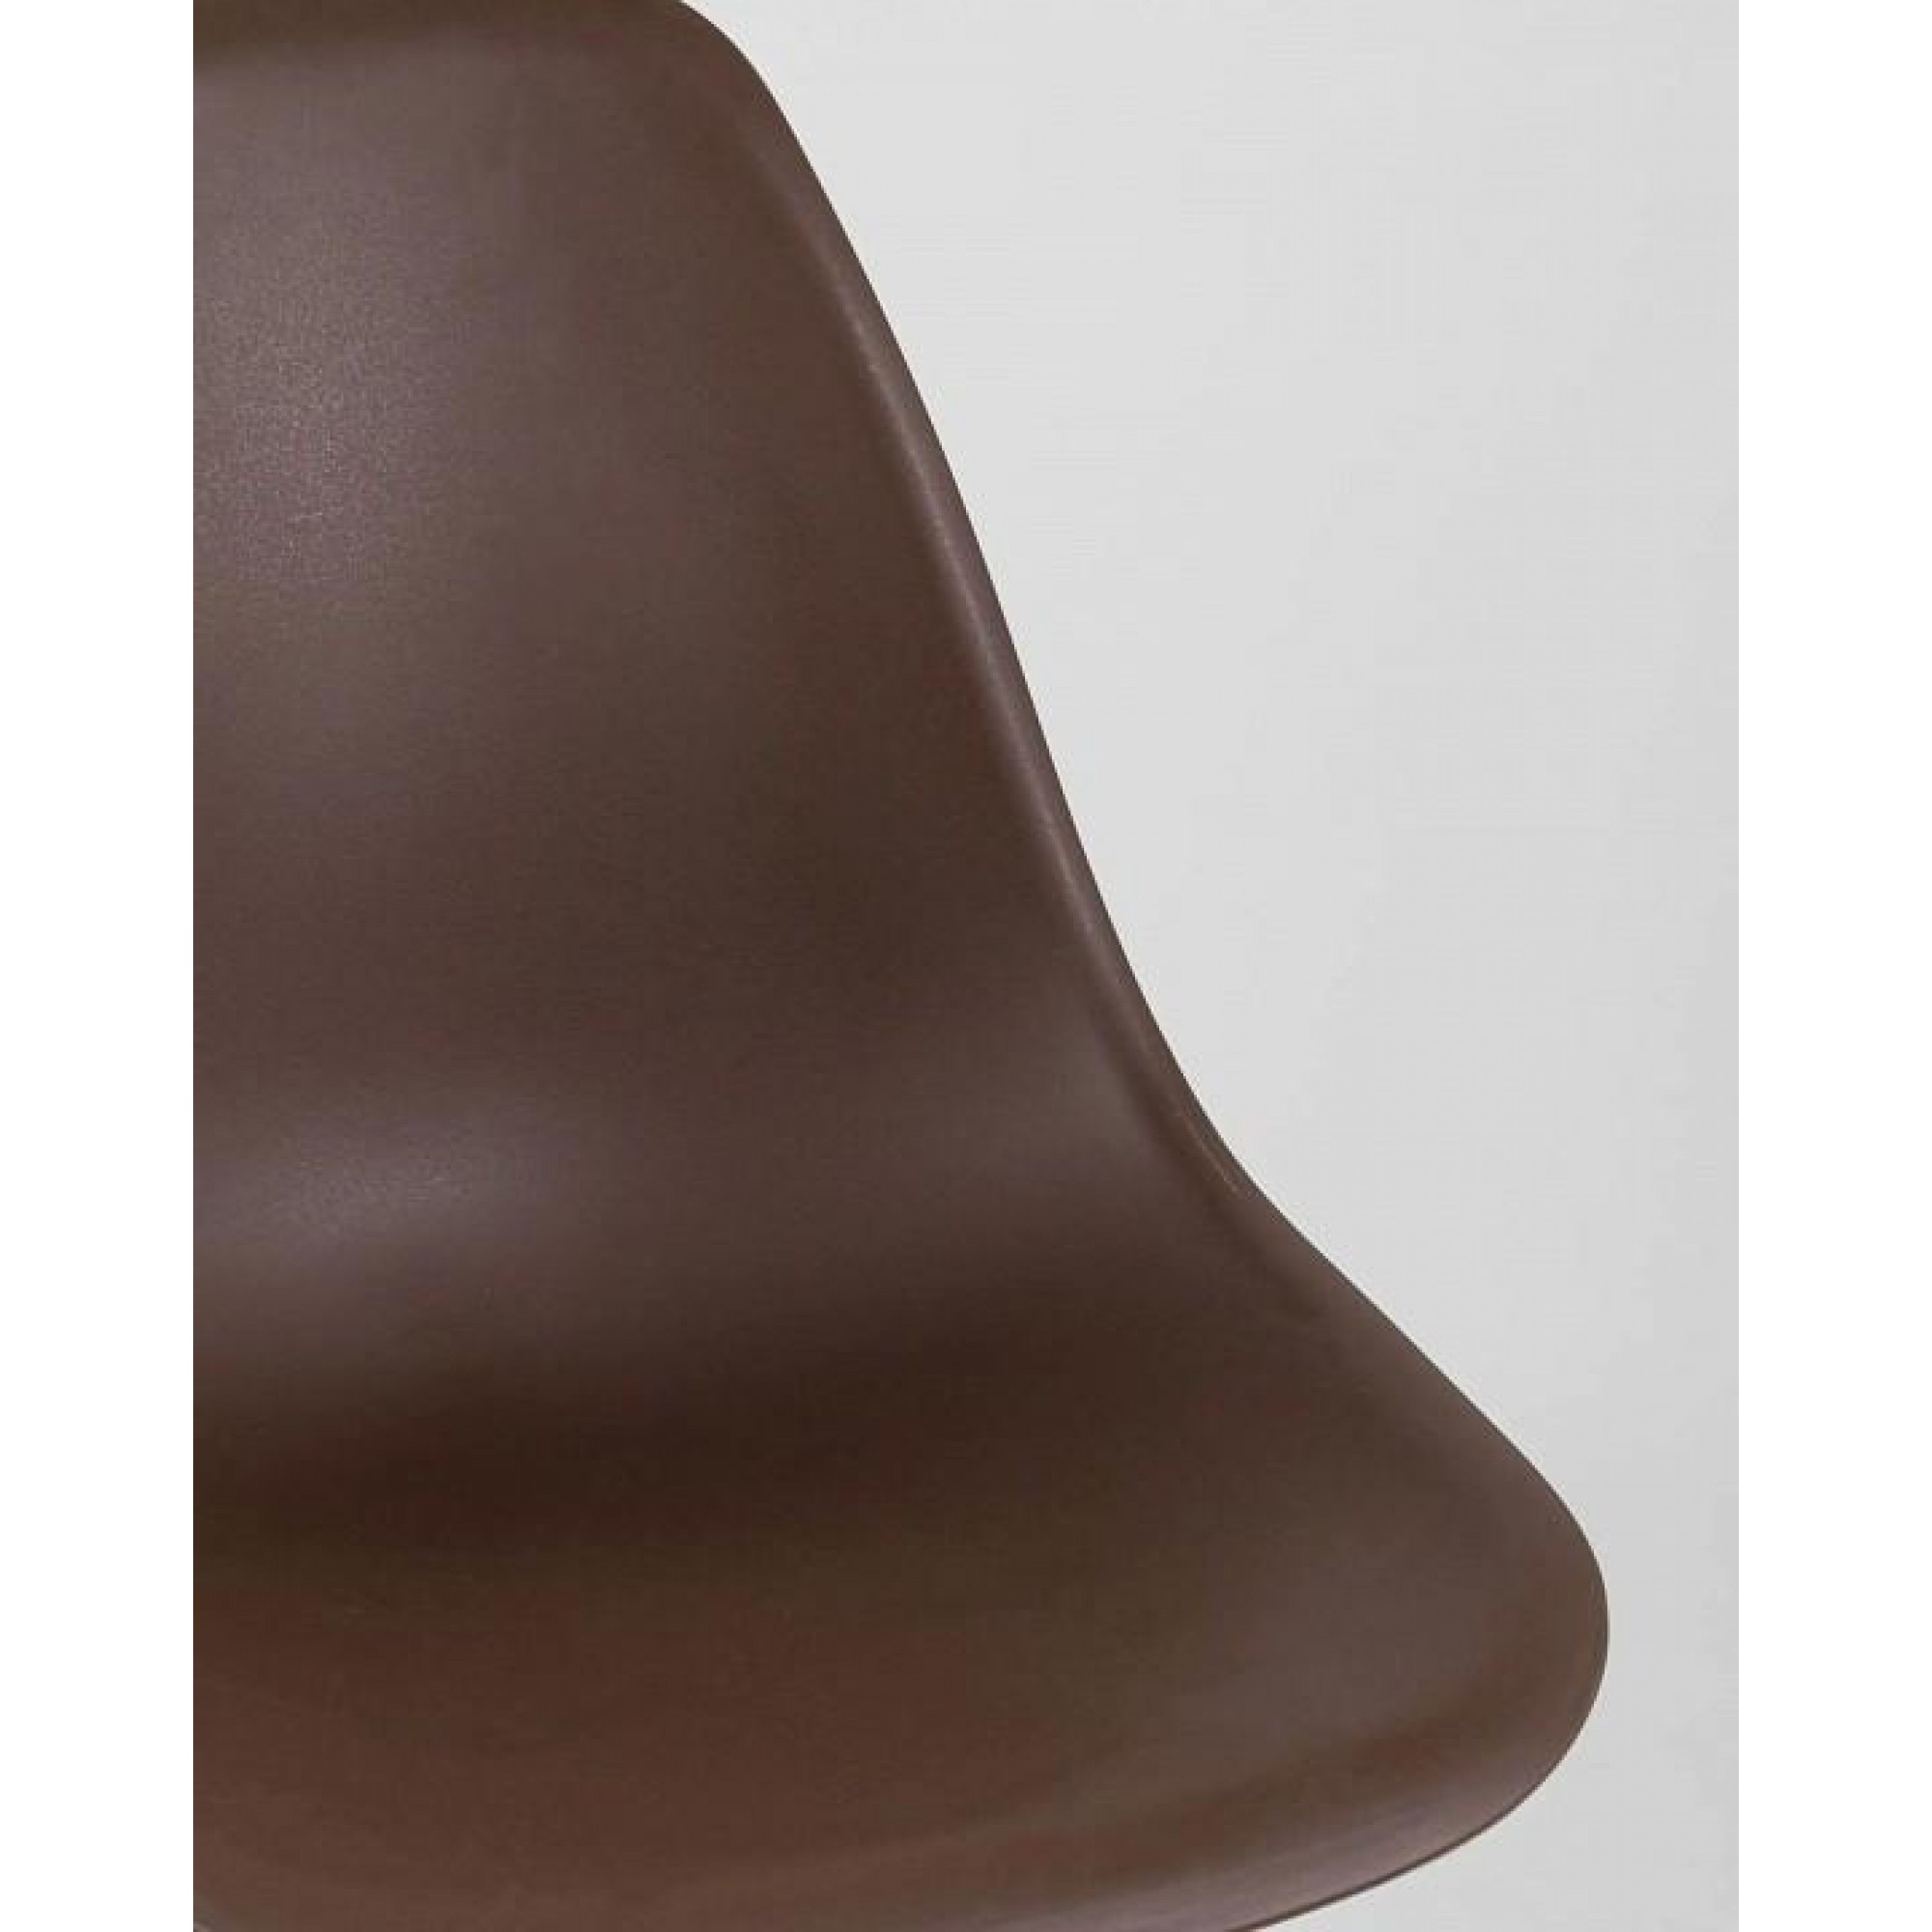 Набор из 4 стульев Eames    SGR_Y801-brown-X4